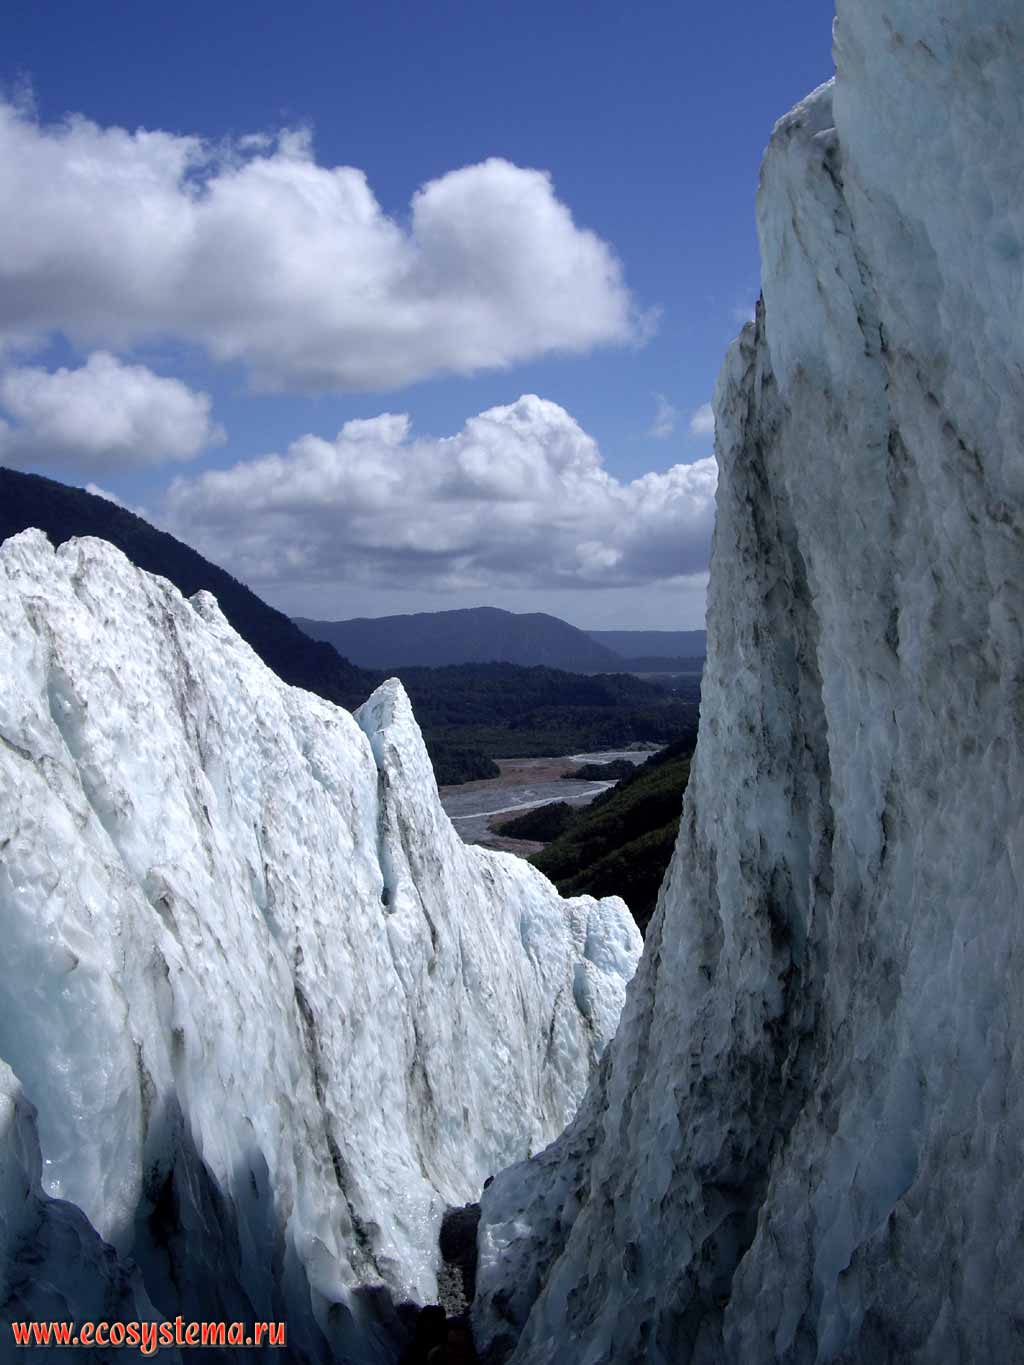 Ice cleft (crack) in the glacier body formed during melting process.
France Joseph Glacier, Westland National Park, West-coast region, South Island, New Zealand